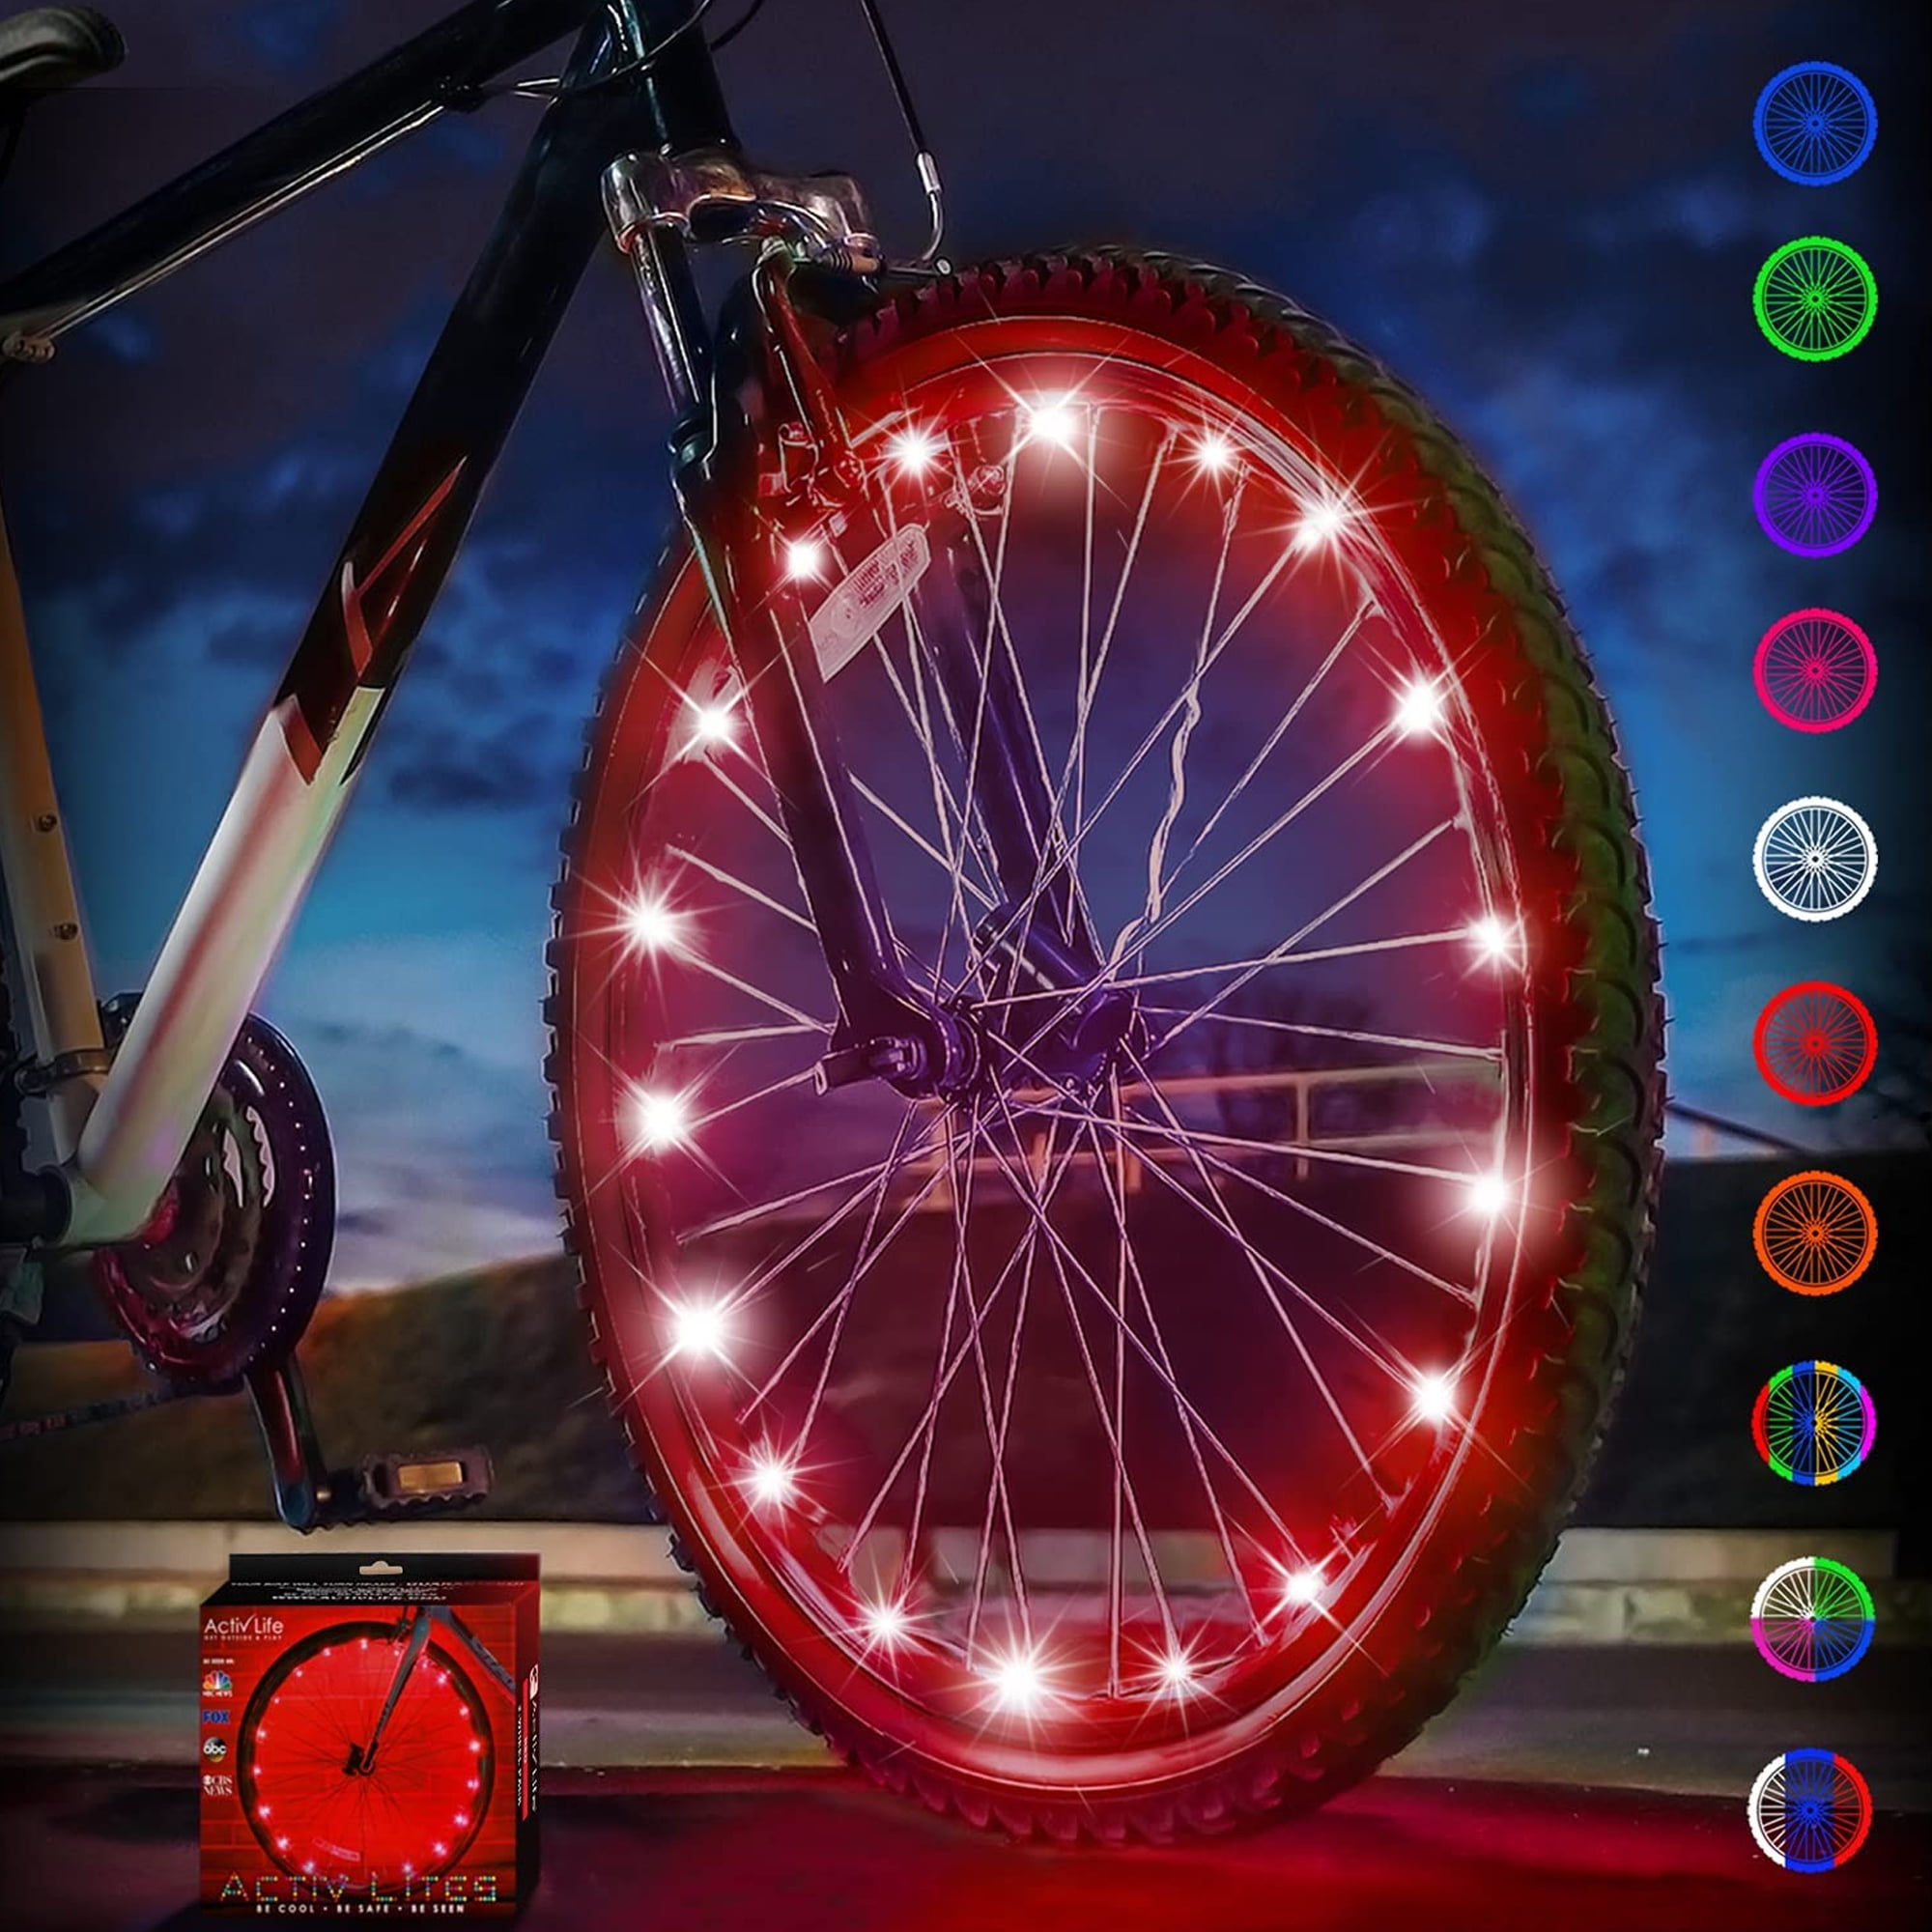 Activ Life LED Bike Wheel Lights Bicycle Spoke Light Accessories for ...